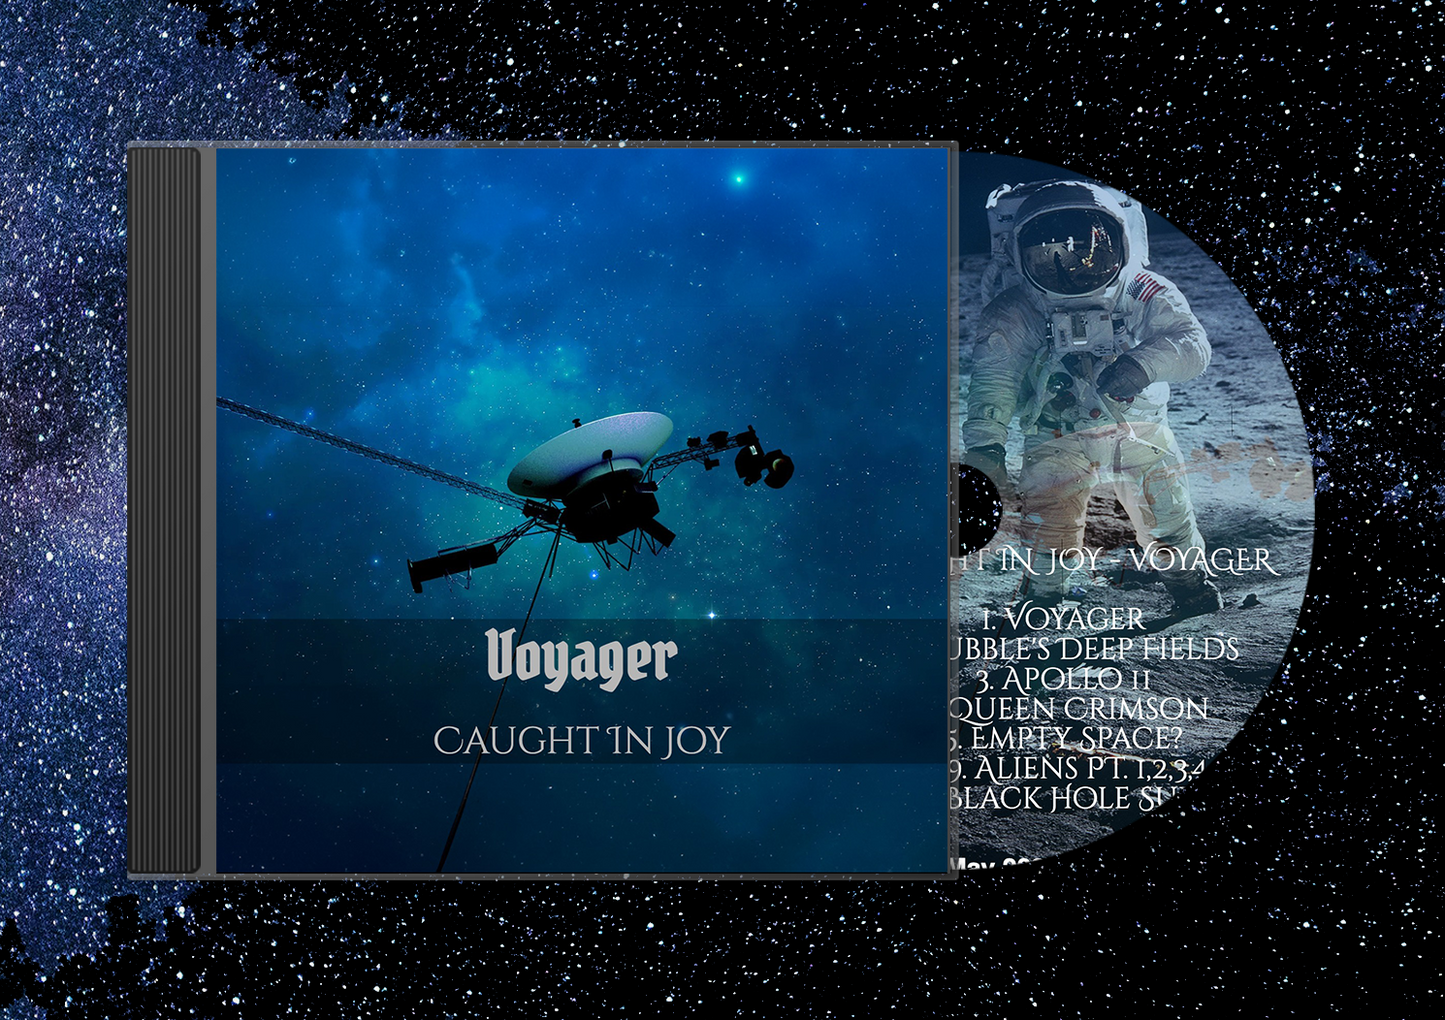 Caught In Joy - Voyager CD